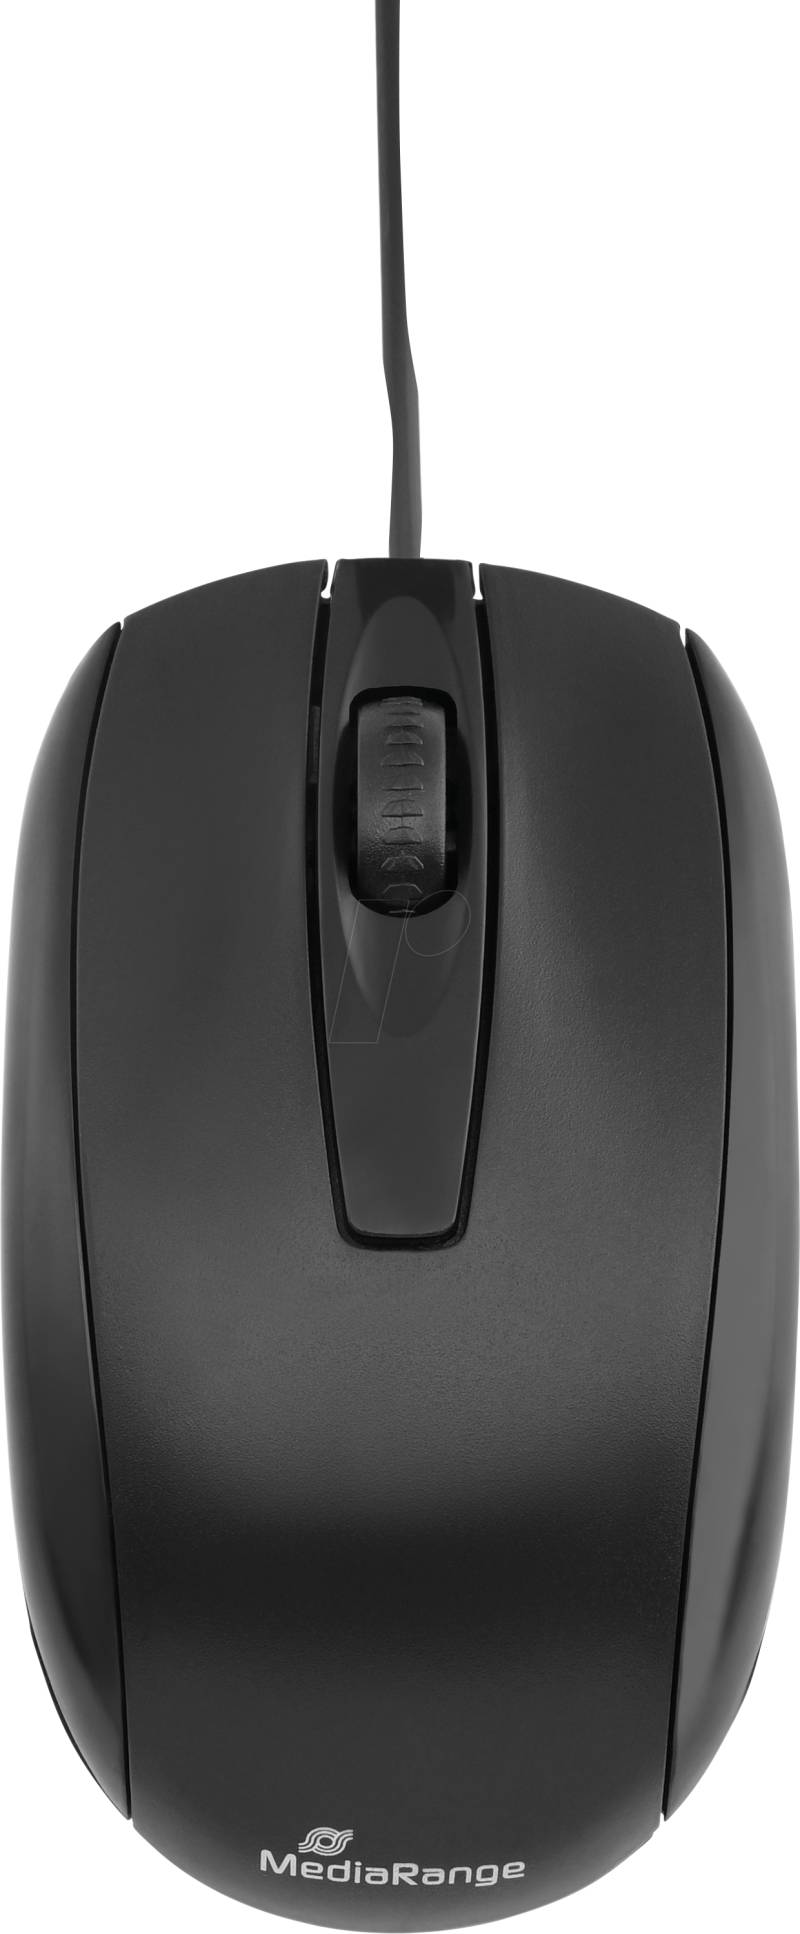 MR OS211 - Maus (Mouse), Kabel, USB, schwarz von MEDIARANGE